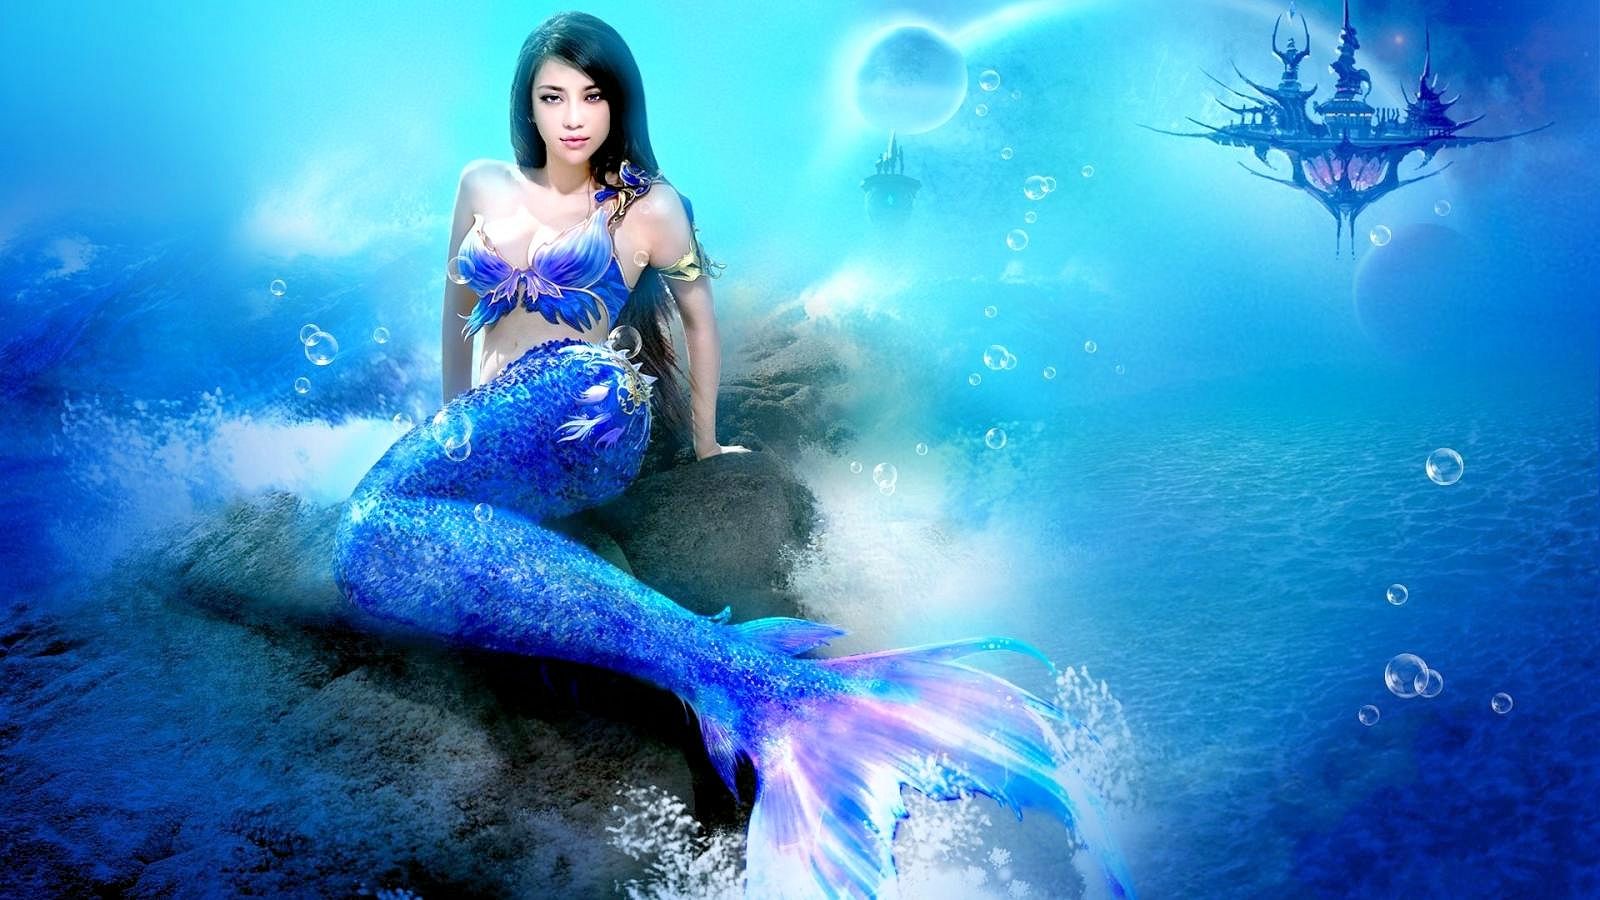 Blue Mermaid Wallpaper Pictures Beautiful